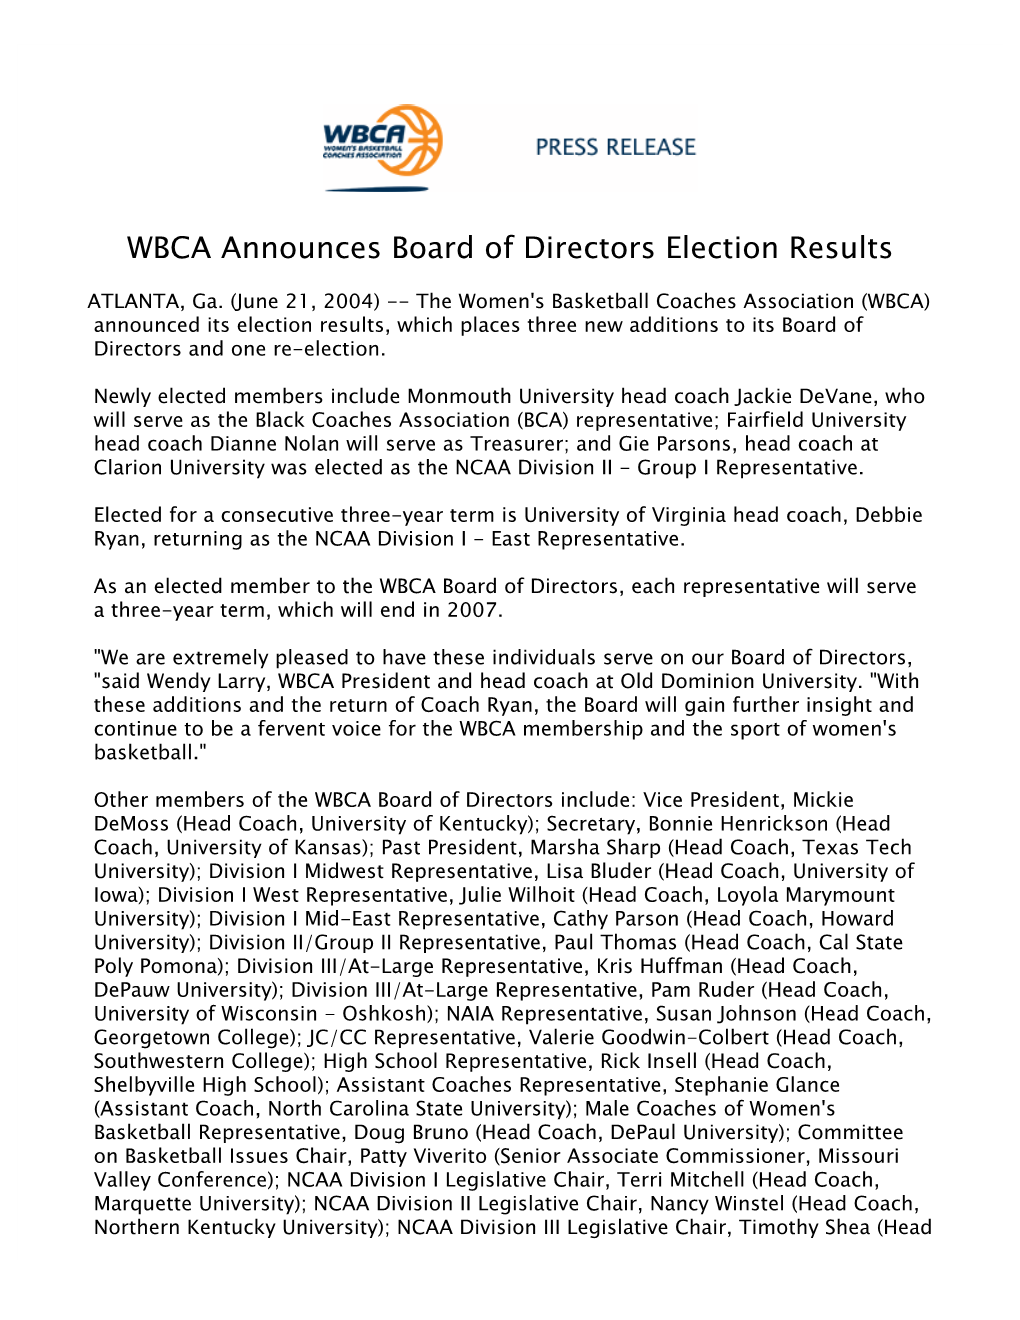 WBCA Announces Board of Directors Election Results 2004-05 062104